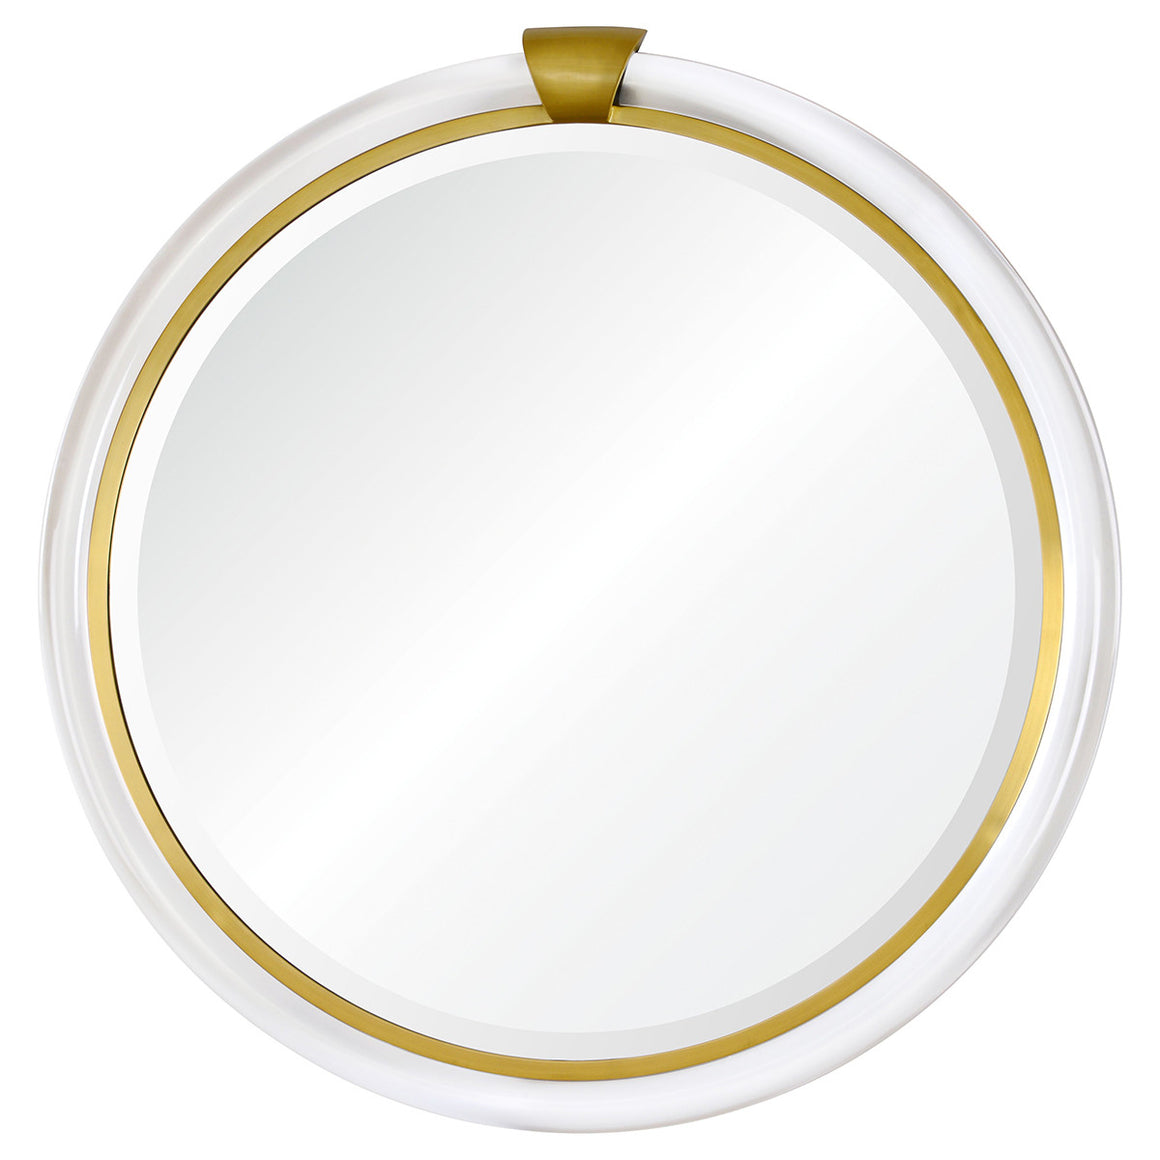 Round Acrylic Mirror – Brass Accents